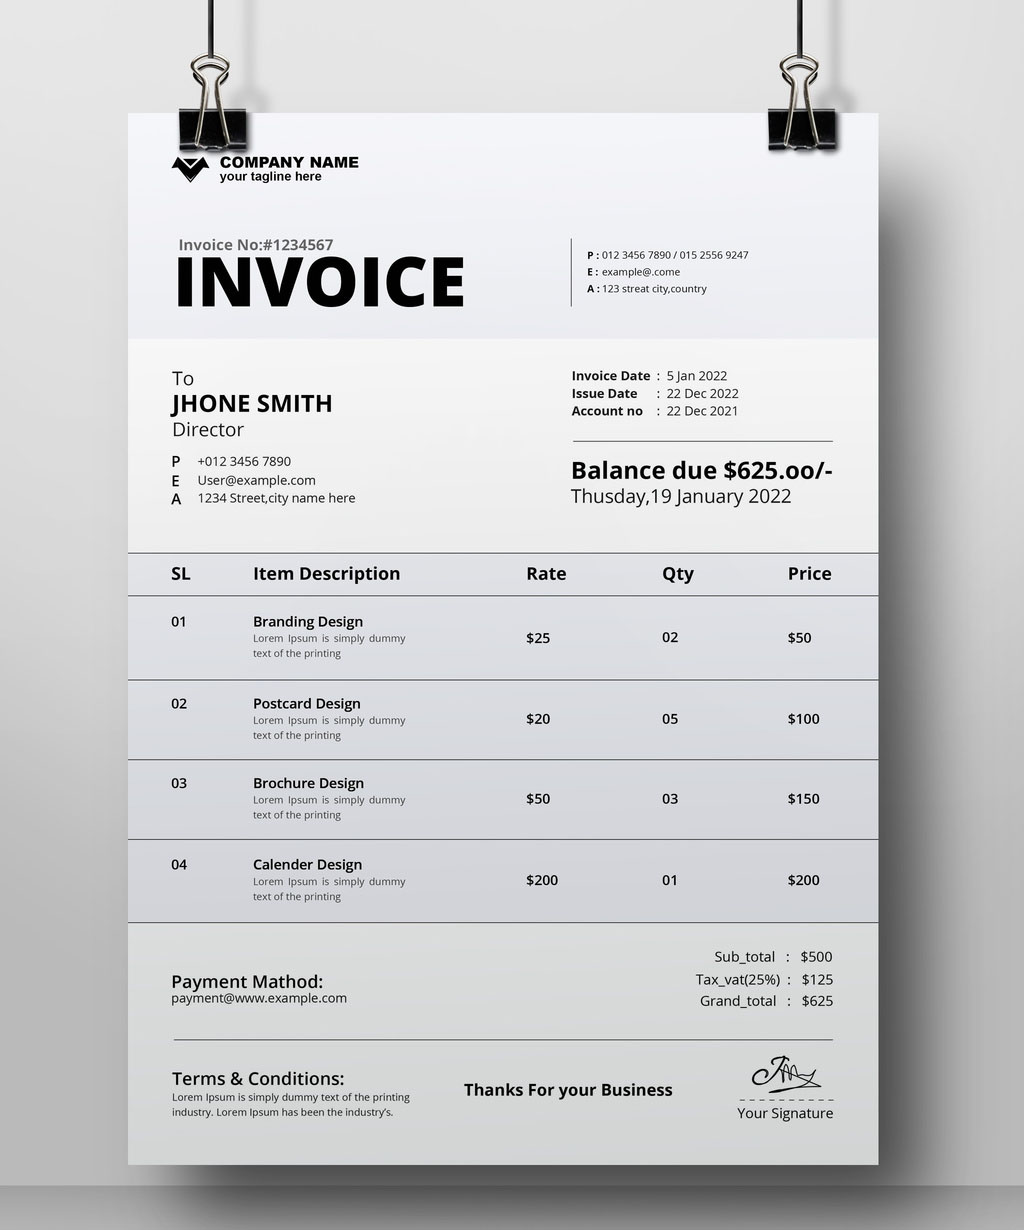 New Invoice Layout